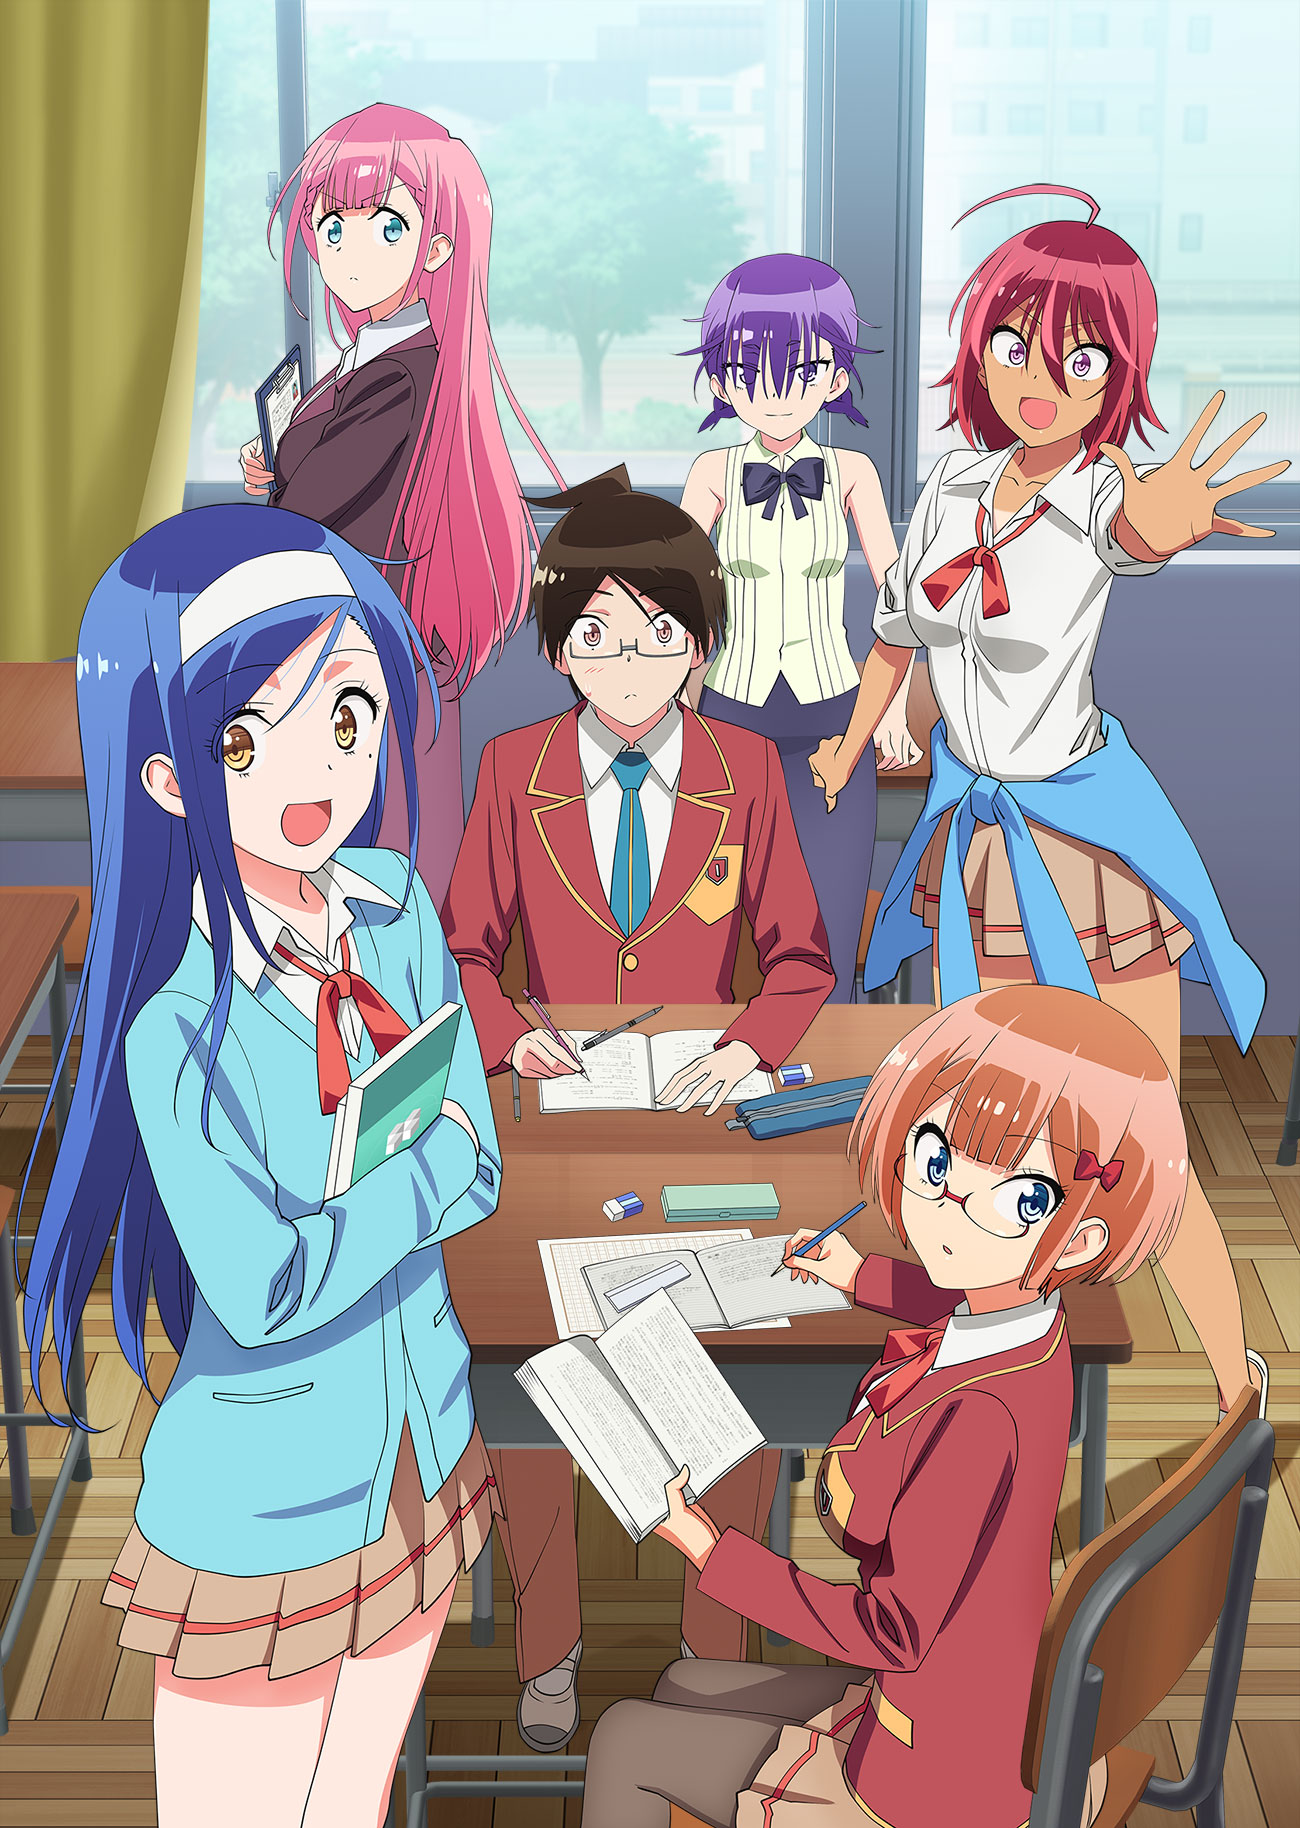 Megami-ryō no Ryōbo-kun Anime Announces Main Cast and Staff